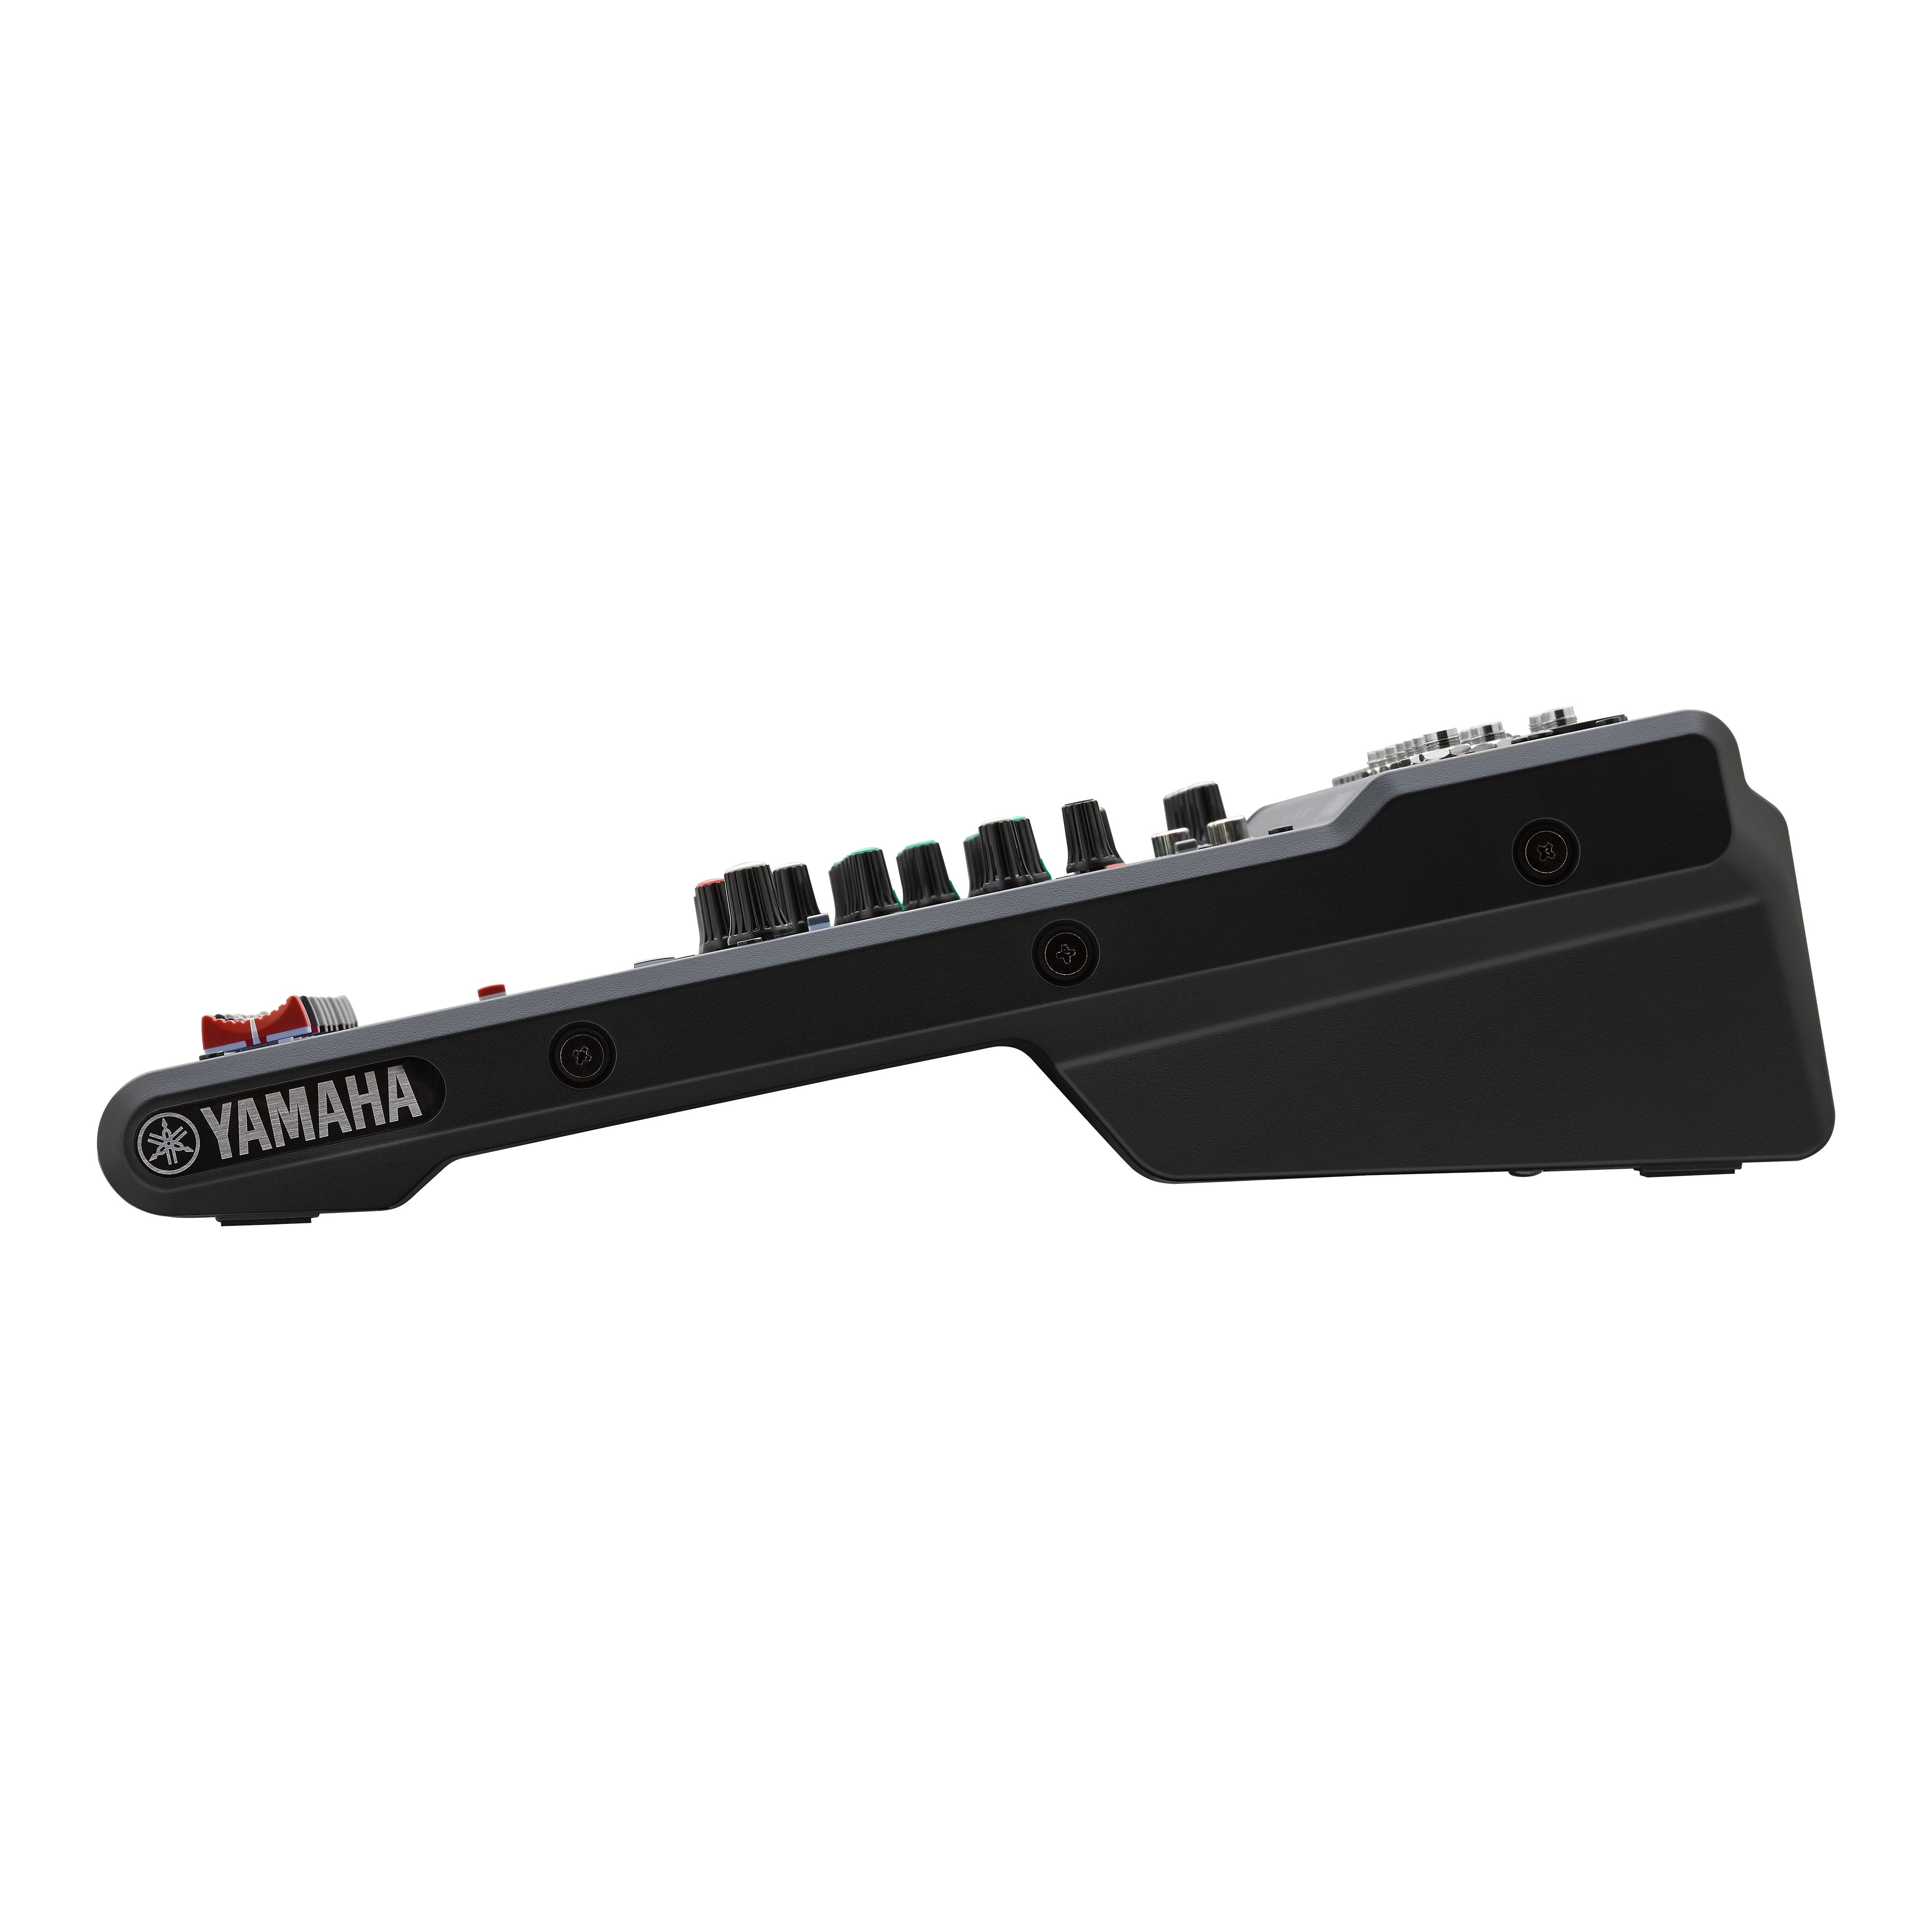 Yamaha 10-Channel Mixer MG10XUF Analog Mixer W/ Effect & USB Interface